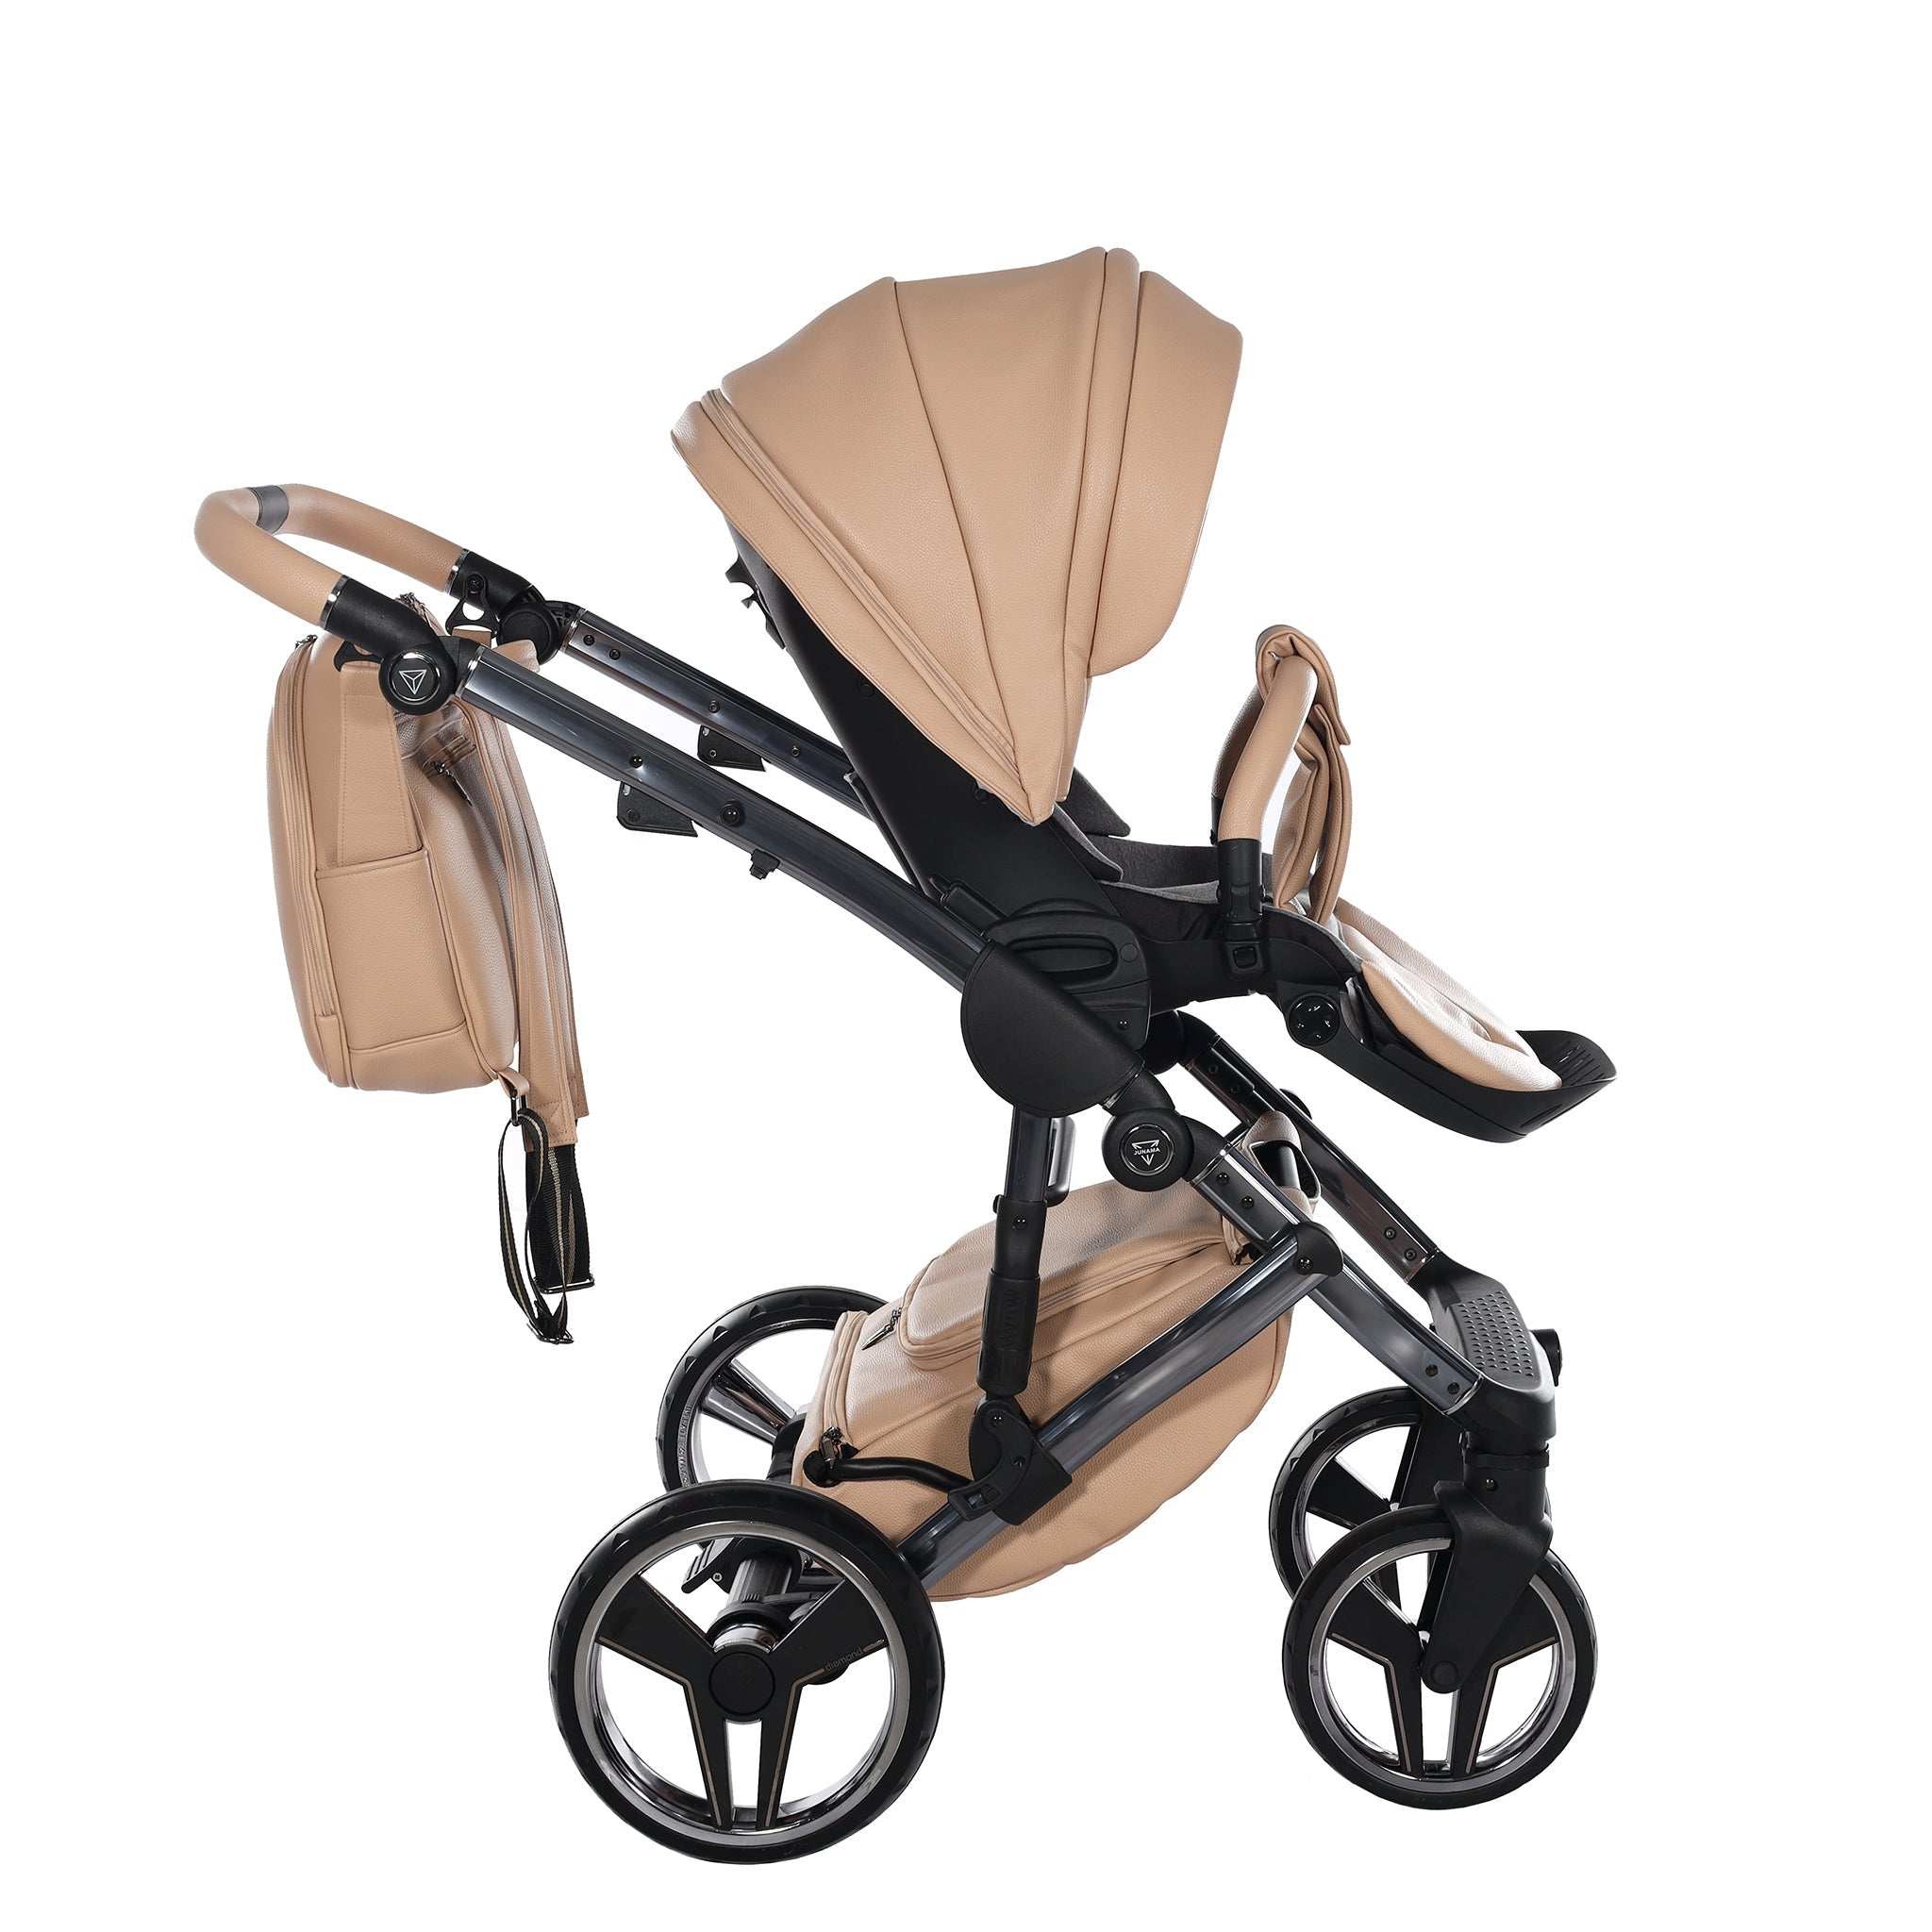 Junama Handcraft, baby prams or stroller 2 in 1 - Camel, number: JUNHC07